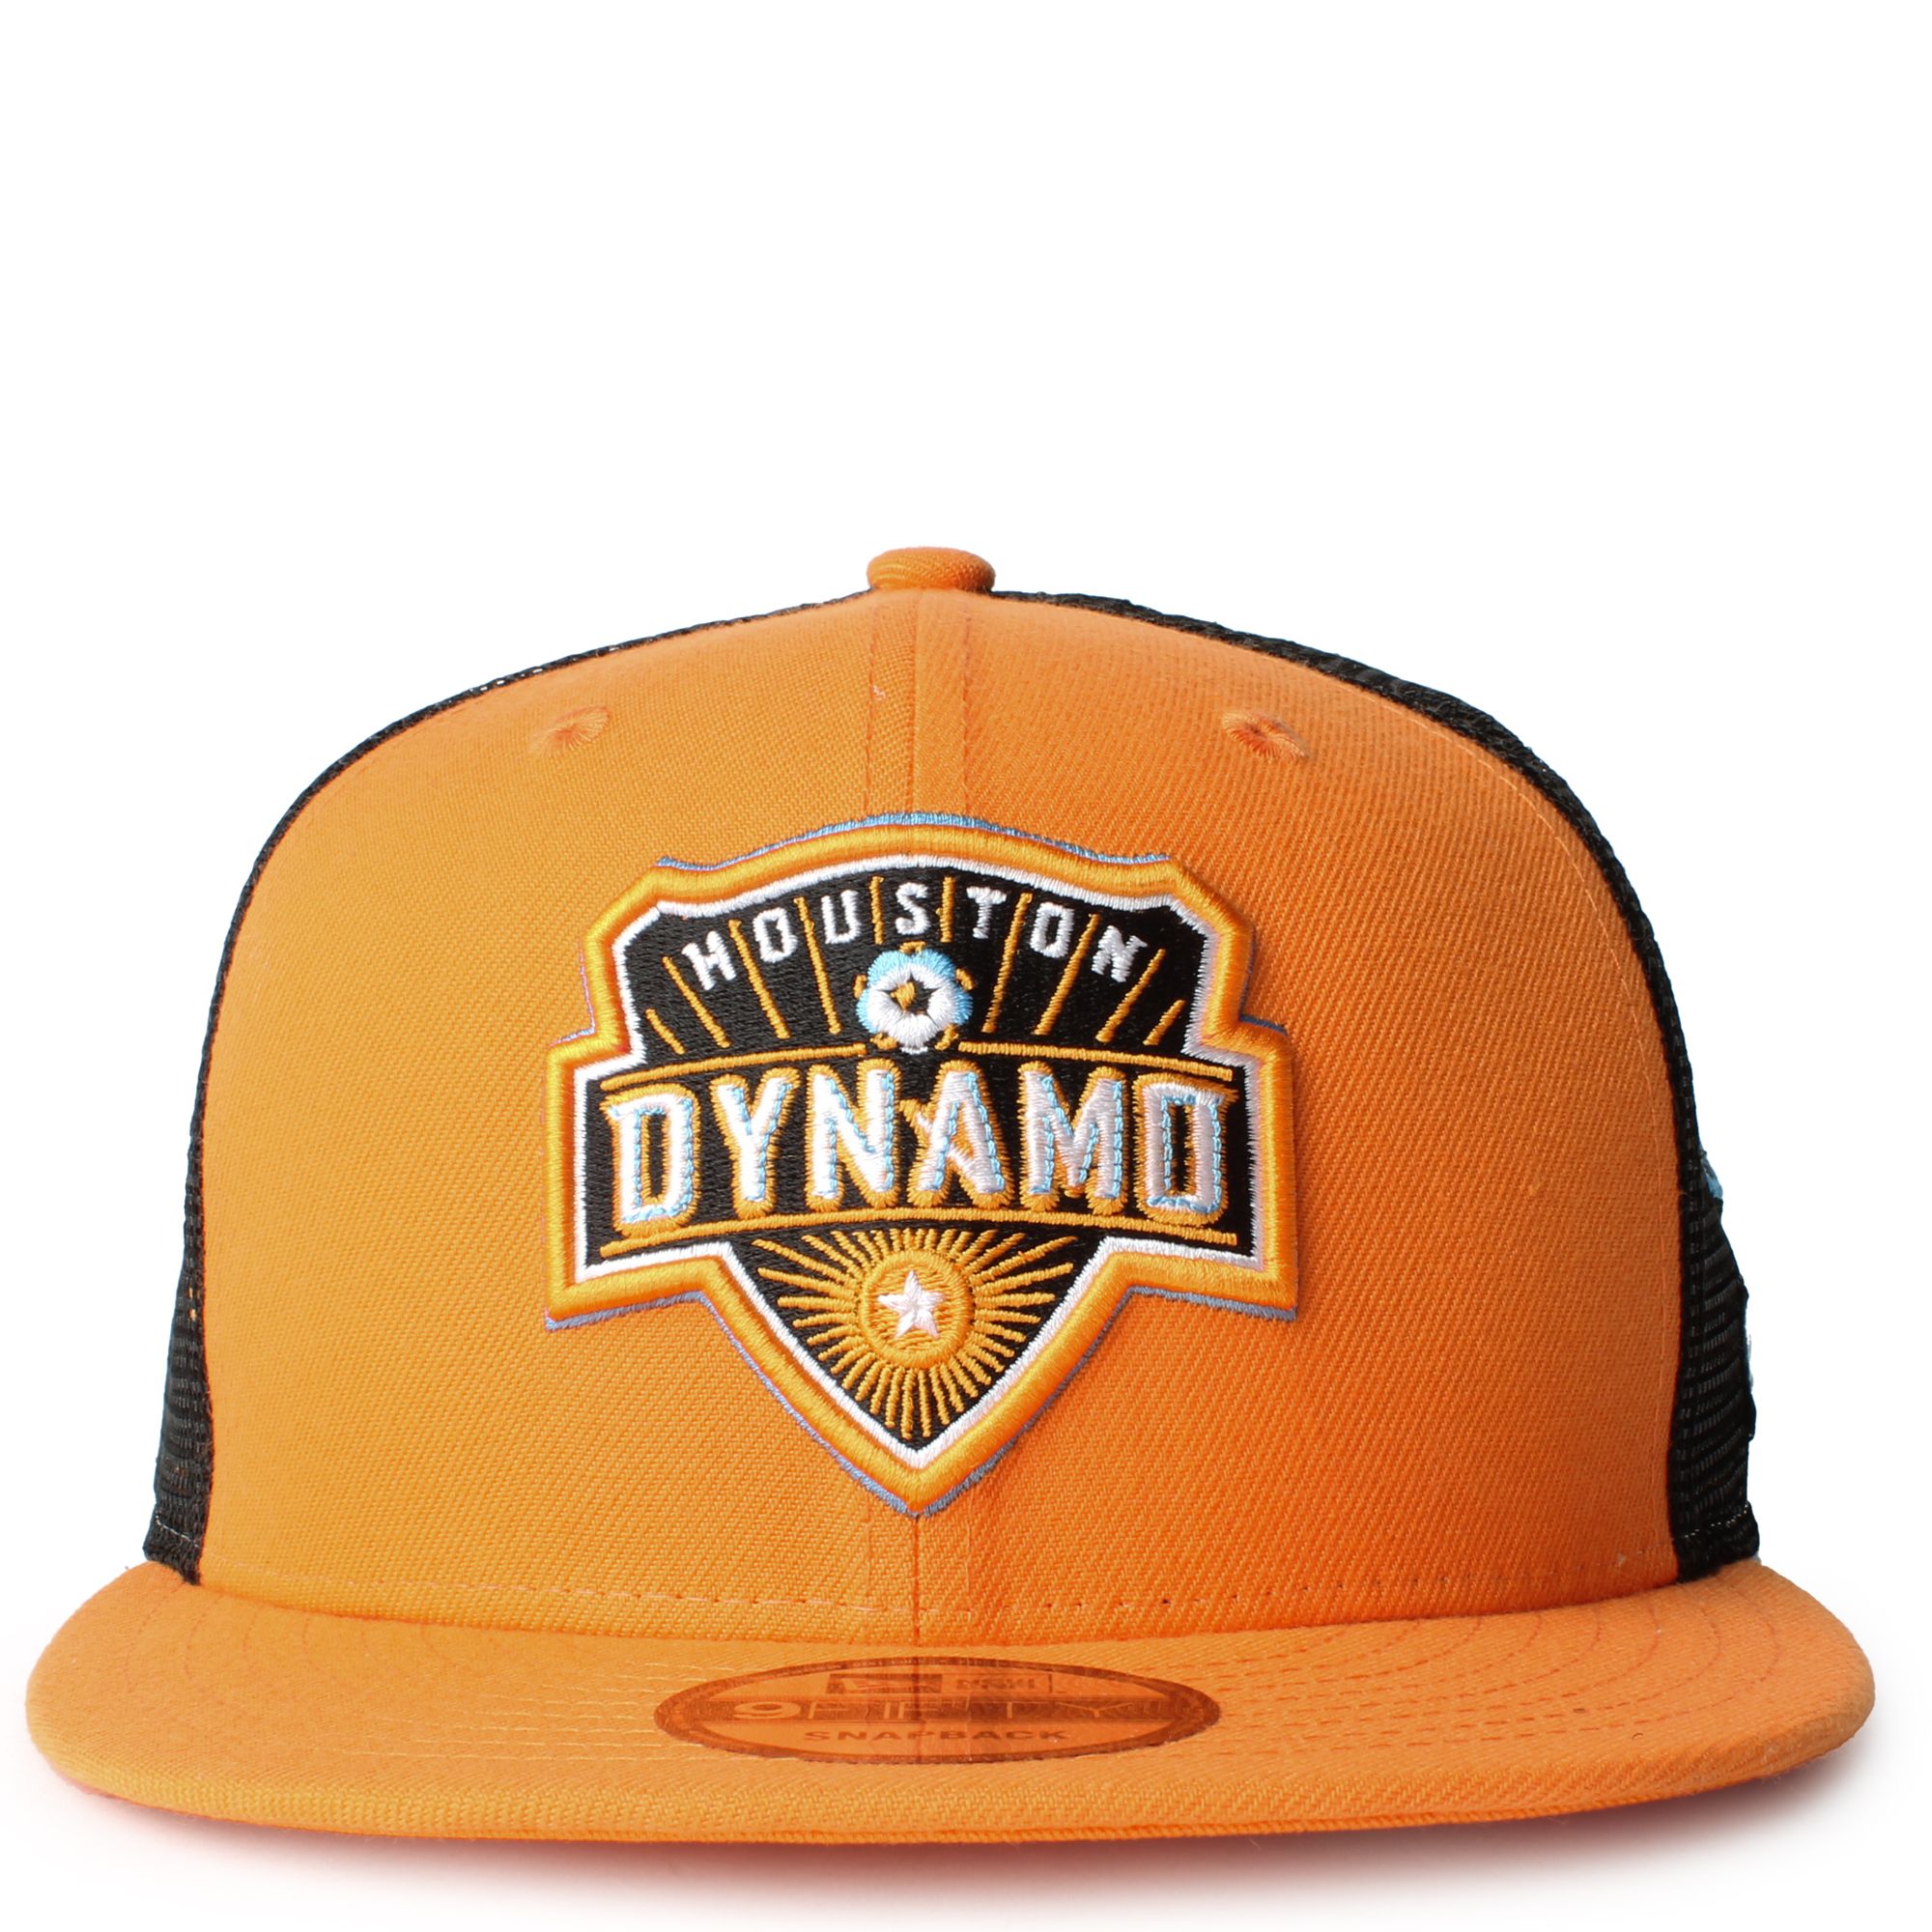 Men's New Era Black Houston Dynamo 59FIFTY Fitted Hat